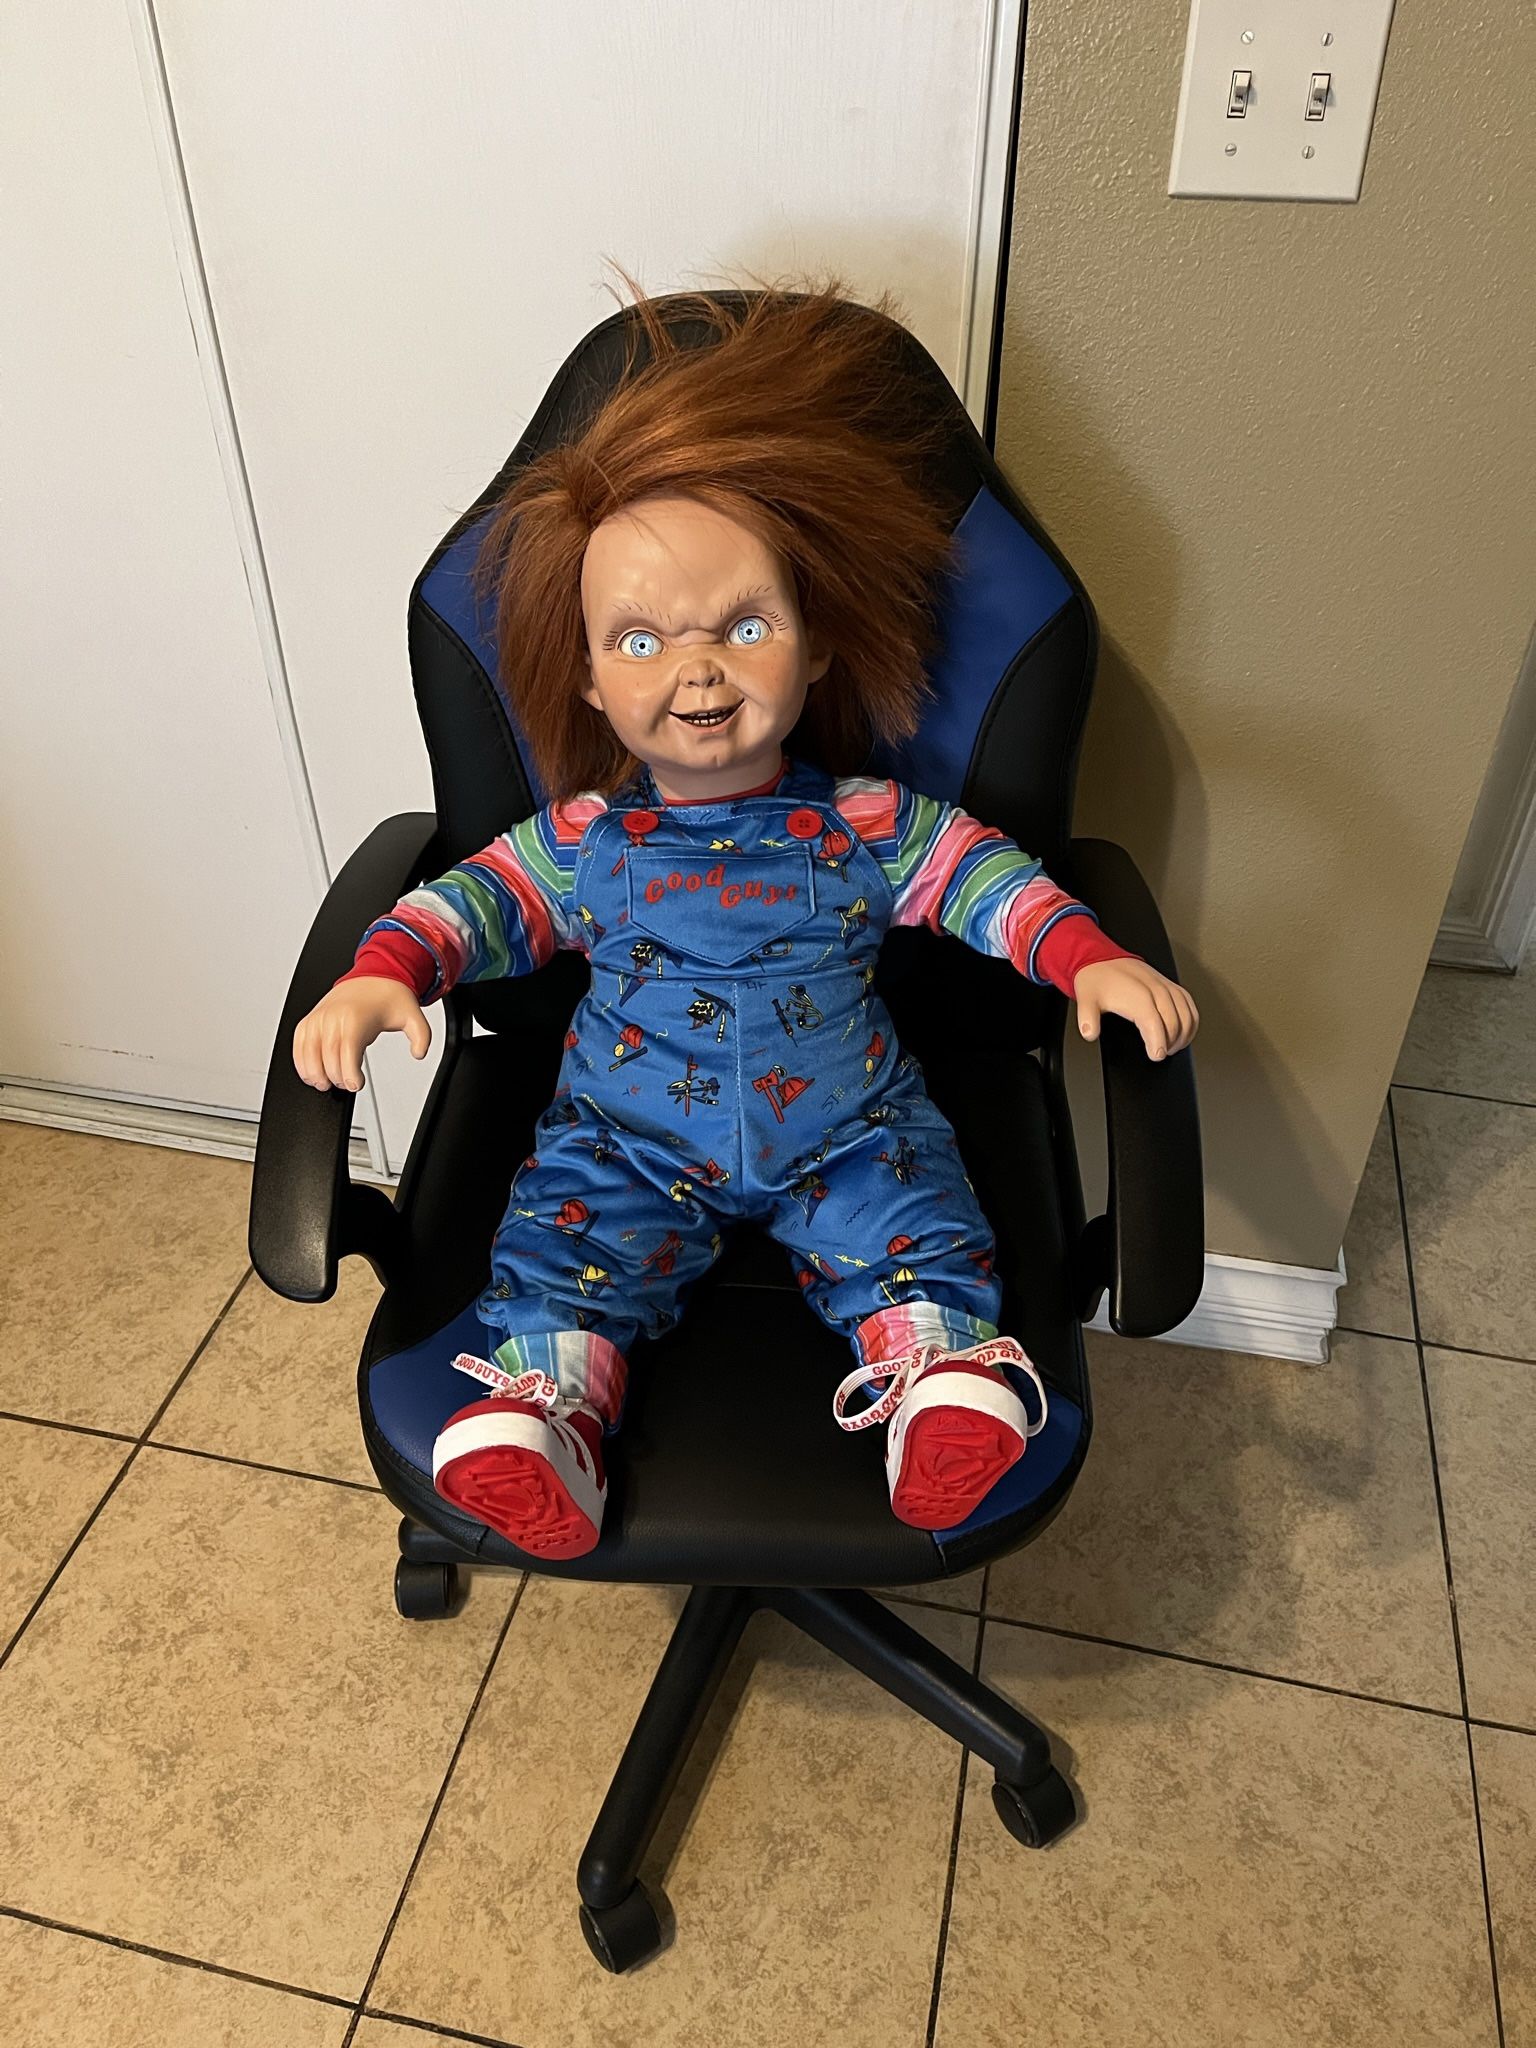 Evil Chucky Doll ( Child’s Play 2/3 Version )